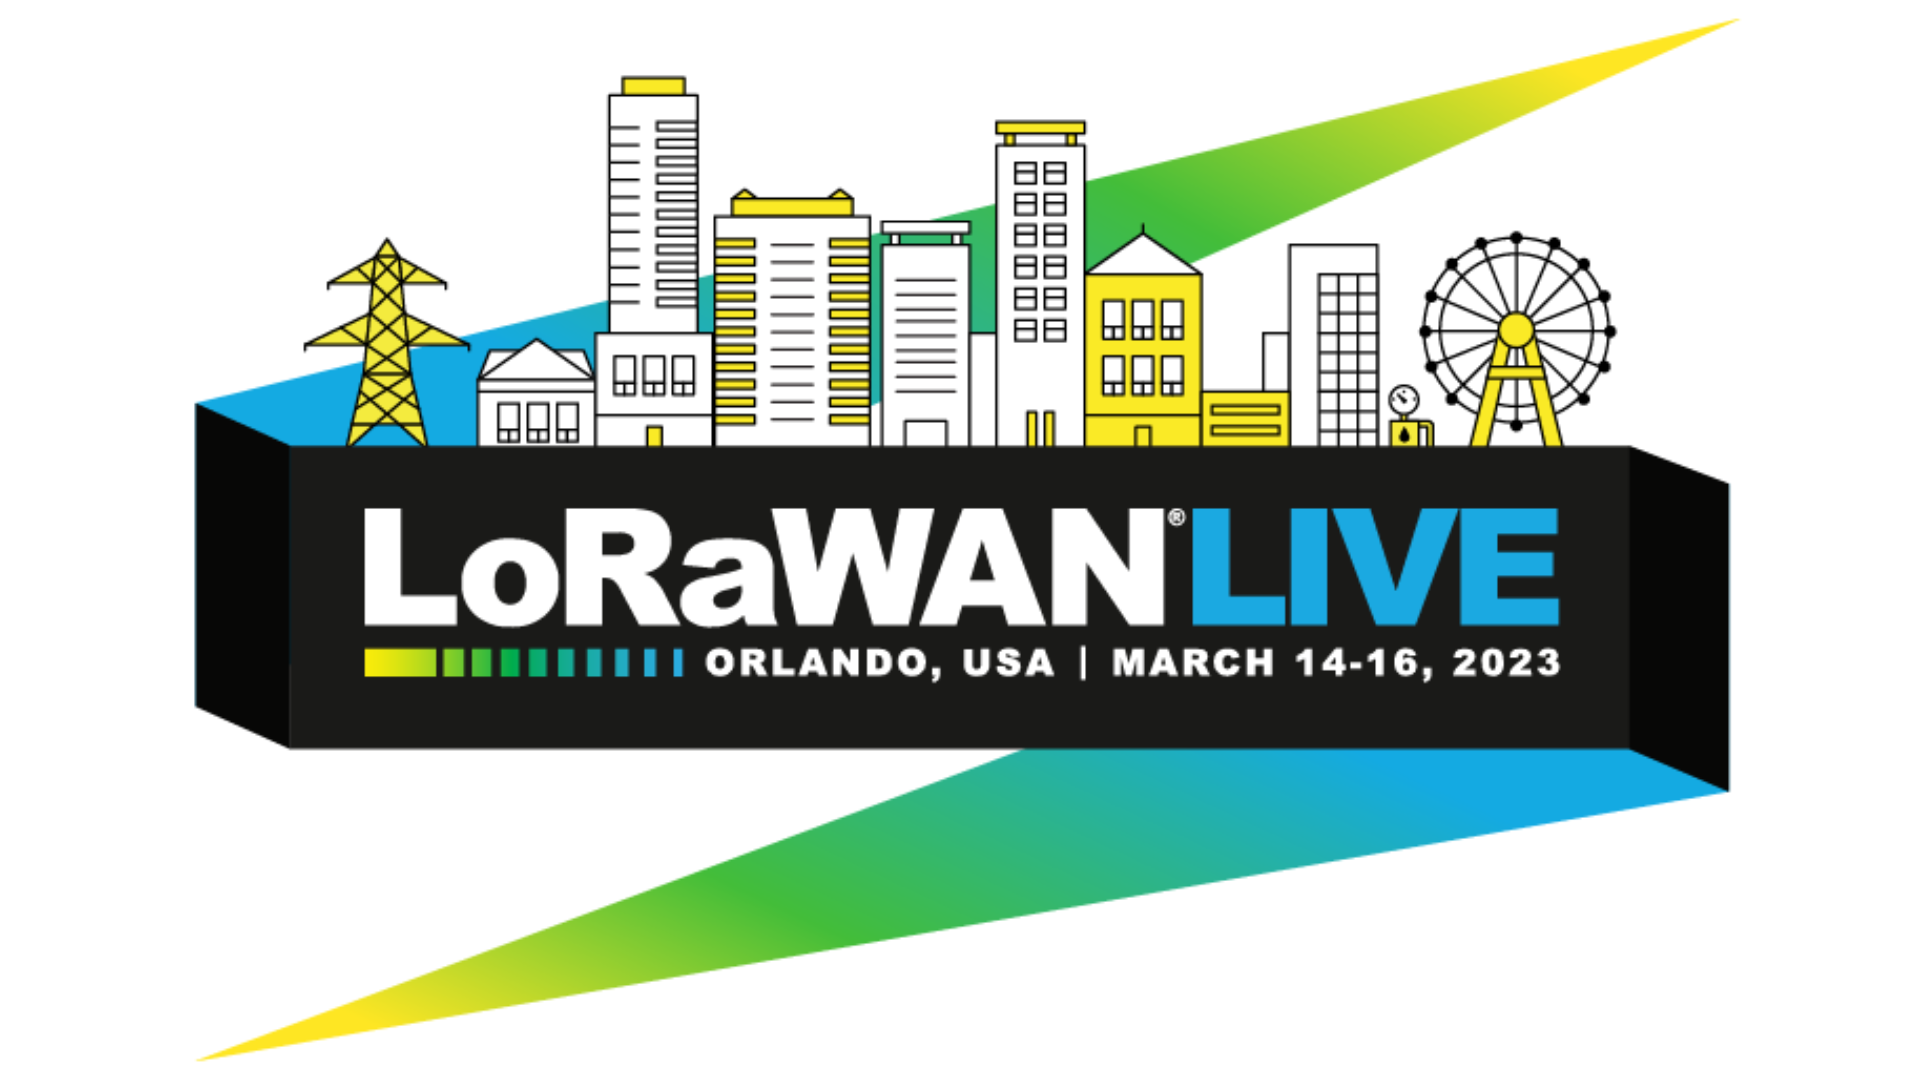 LoRaWAN Live Orlando event logo